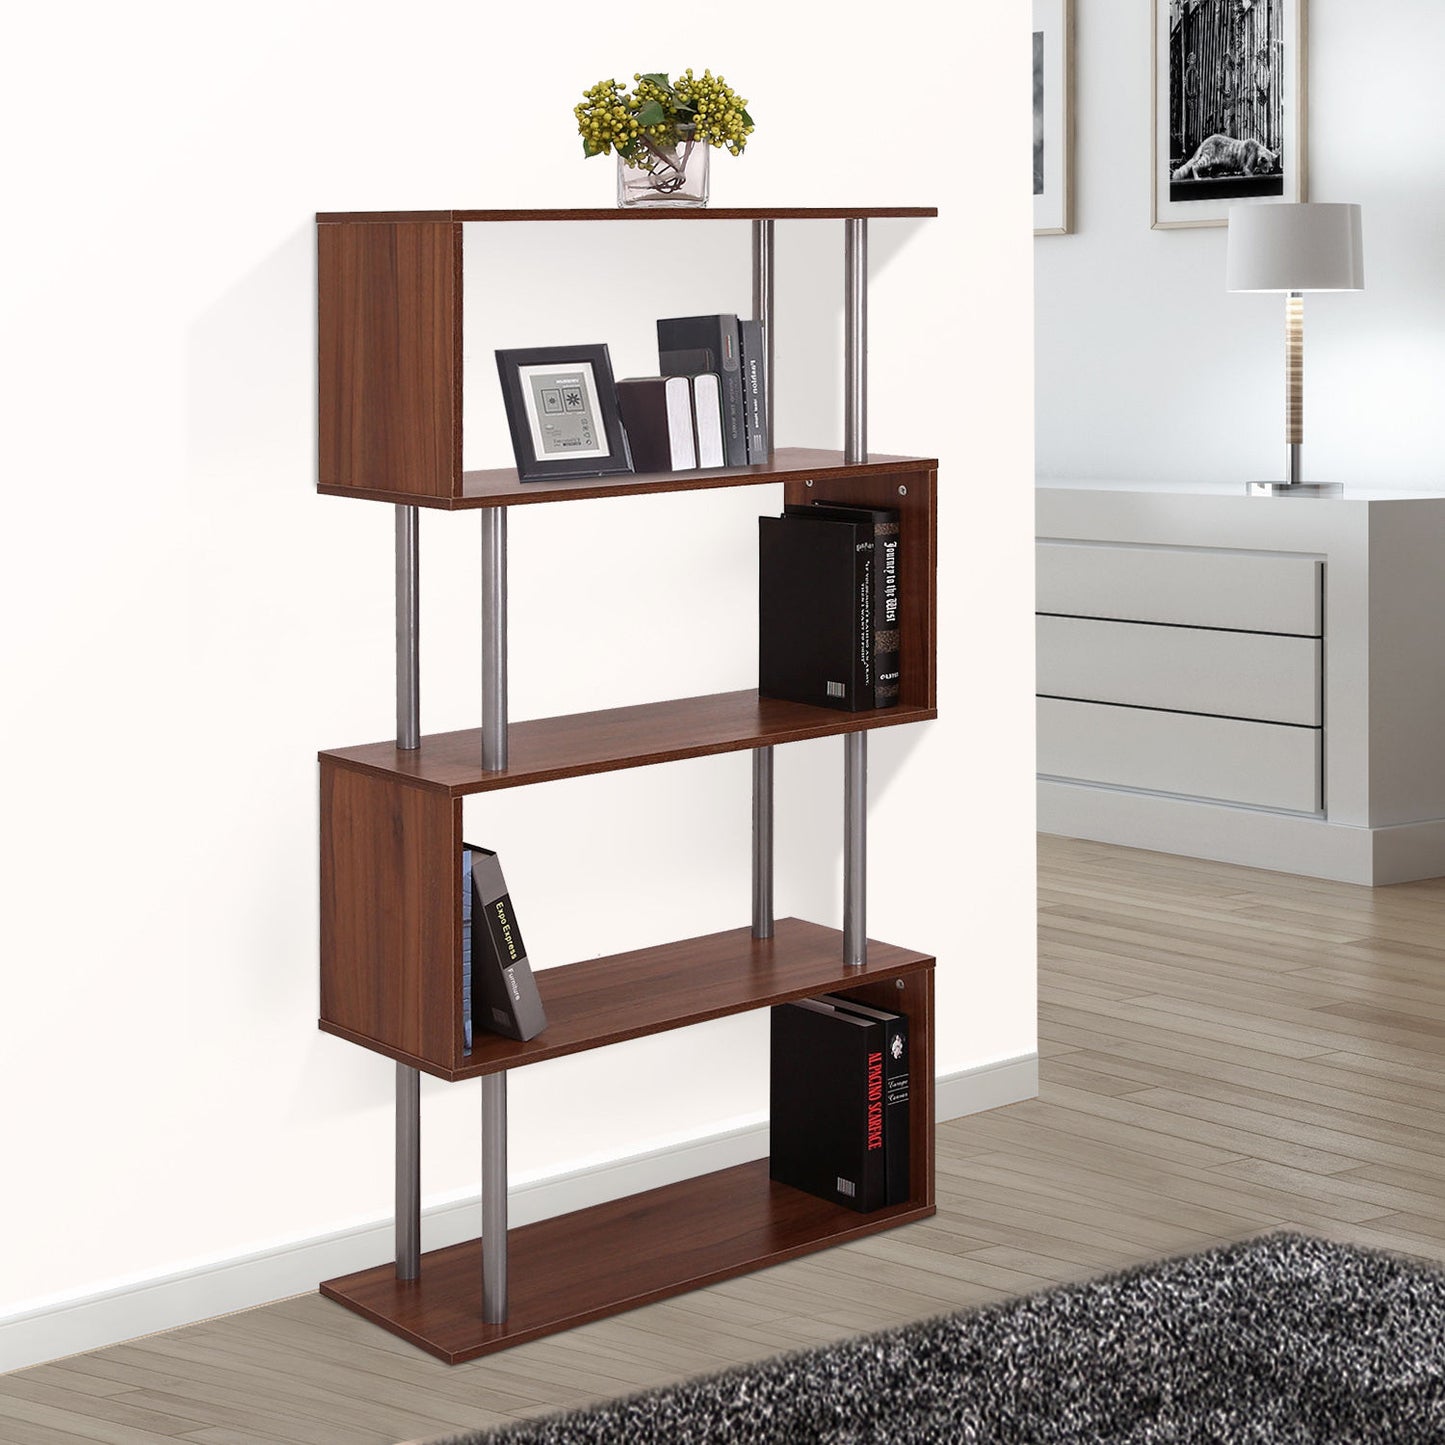 HOMCOM Wooden Bookcase S Shape Storage Display Unit 4 Shelf Home